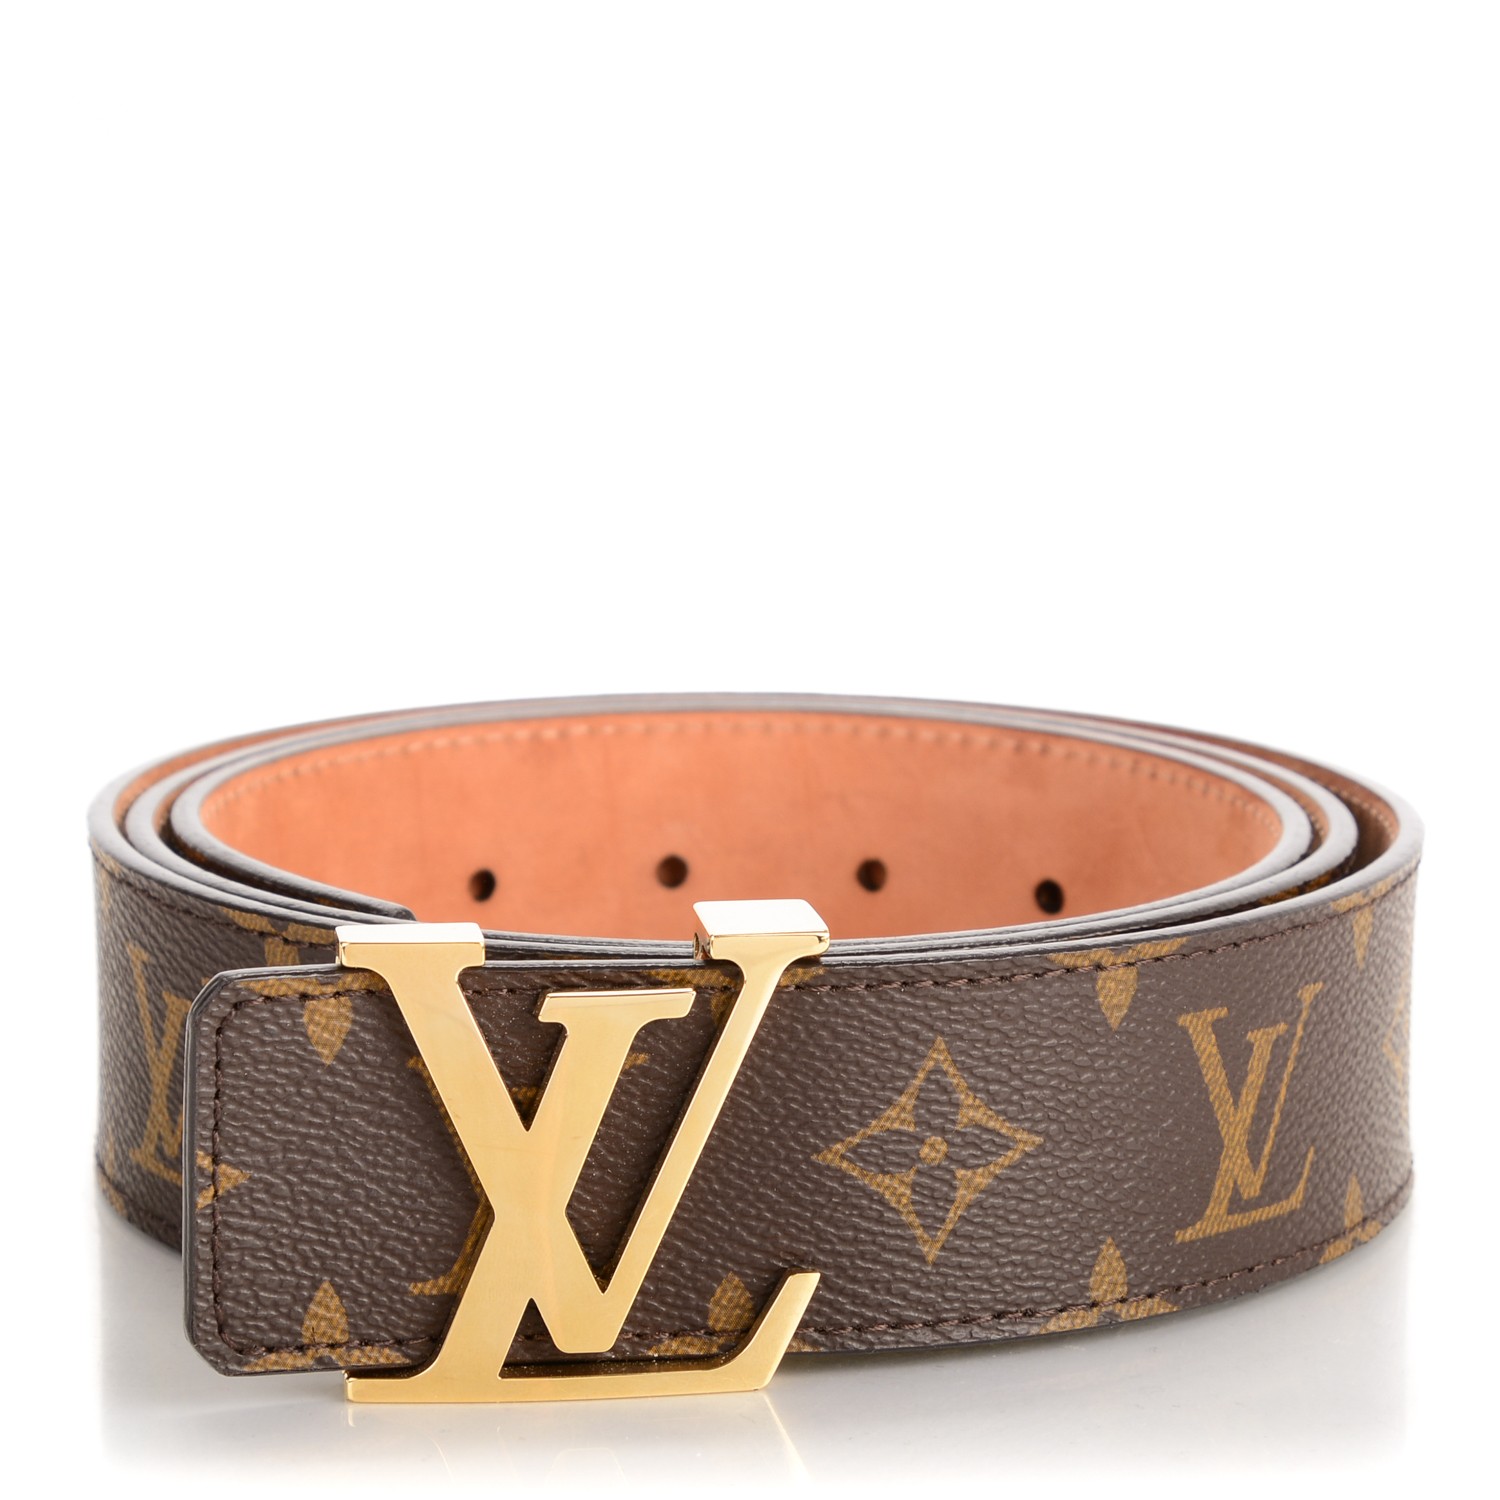 Louis Vuitton LV Initiales 30 mm Reversible Belt Brown + Calf Leather. Size 90 cm